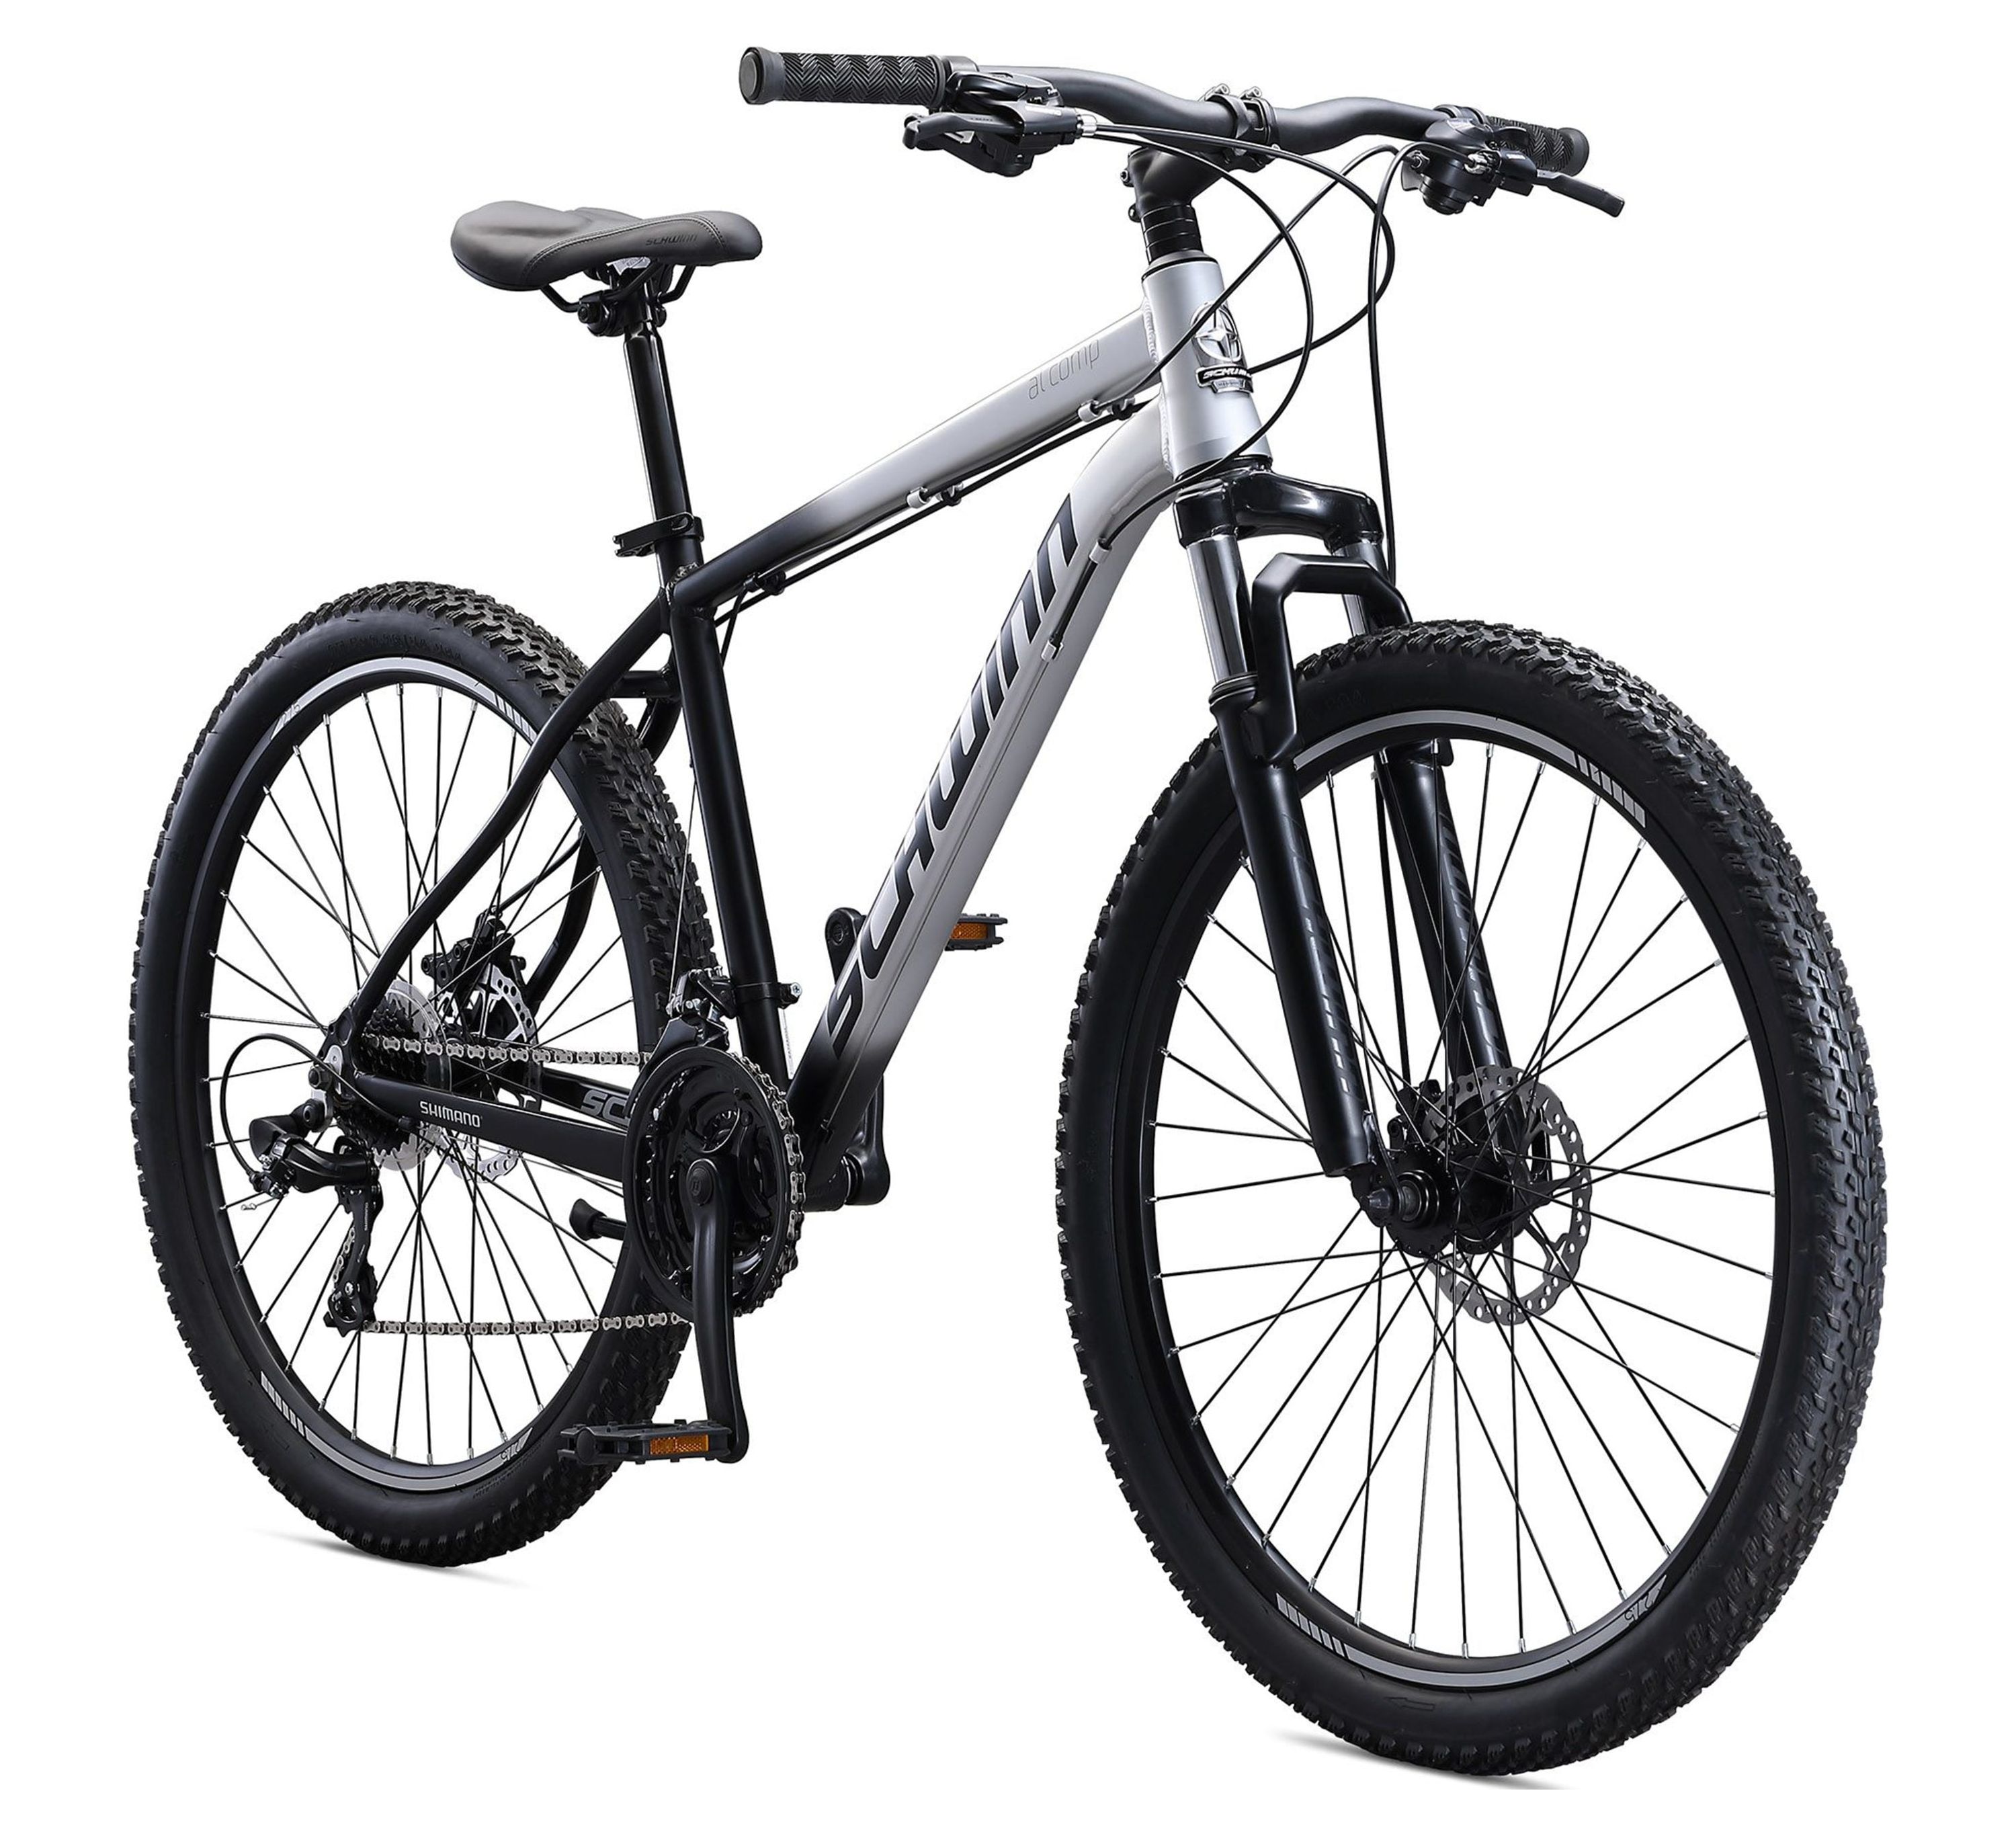 Schwinn AL Comp 27.5 inch Men's Mountain Bike, 21 Speed Adult Bicycle, Grey - image 1 of 9